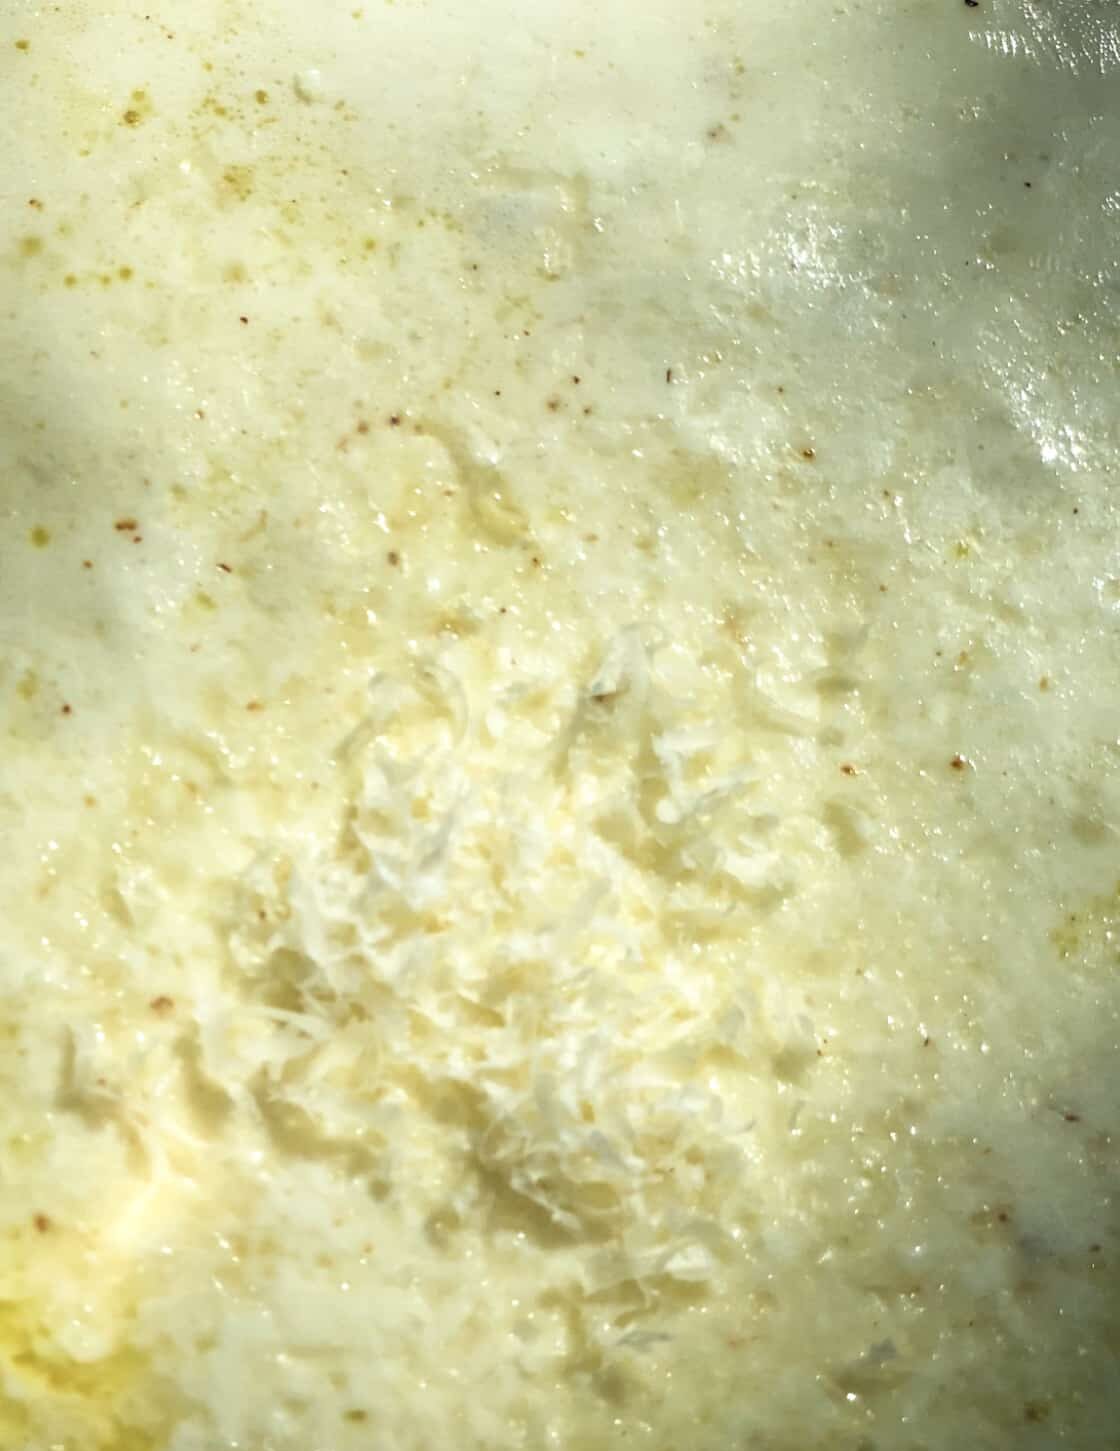 adding parmigiano to the cream sauce. process photo.